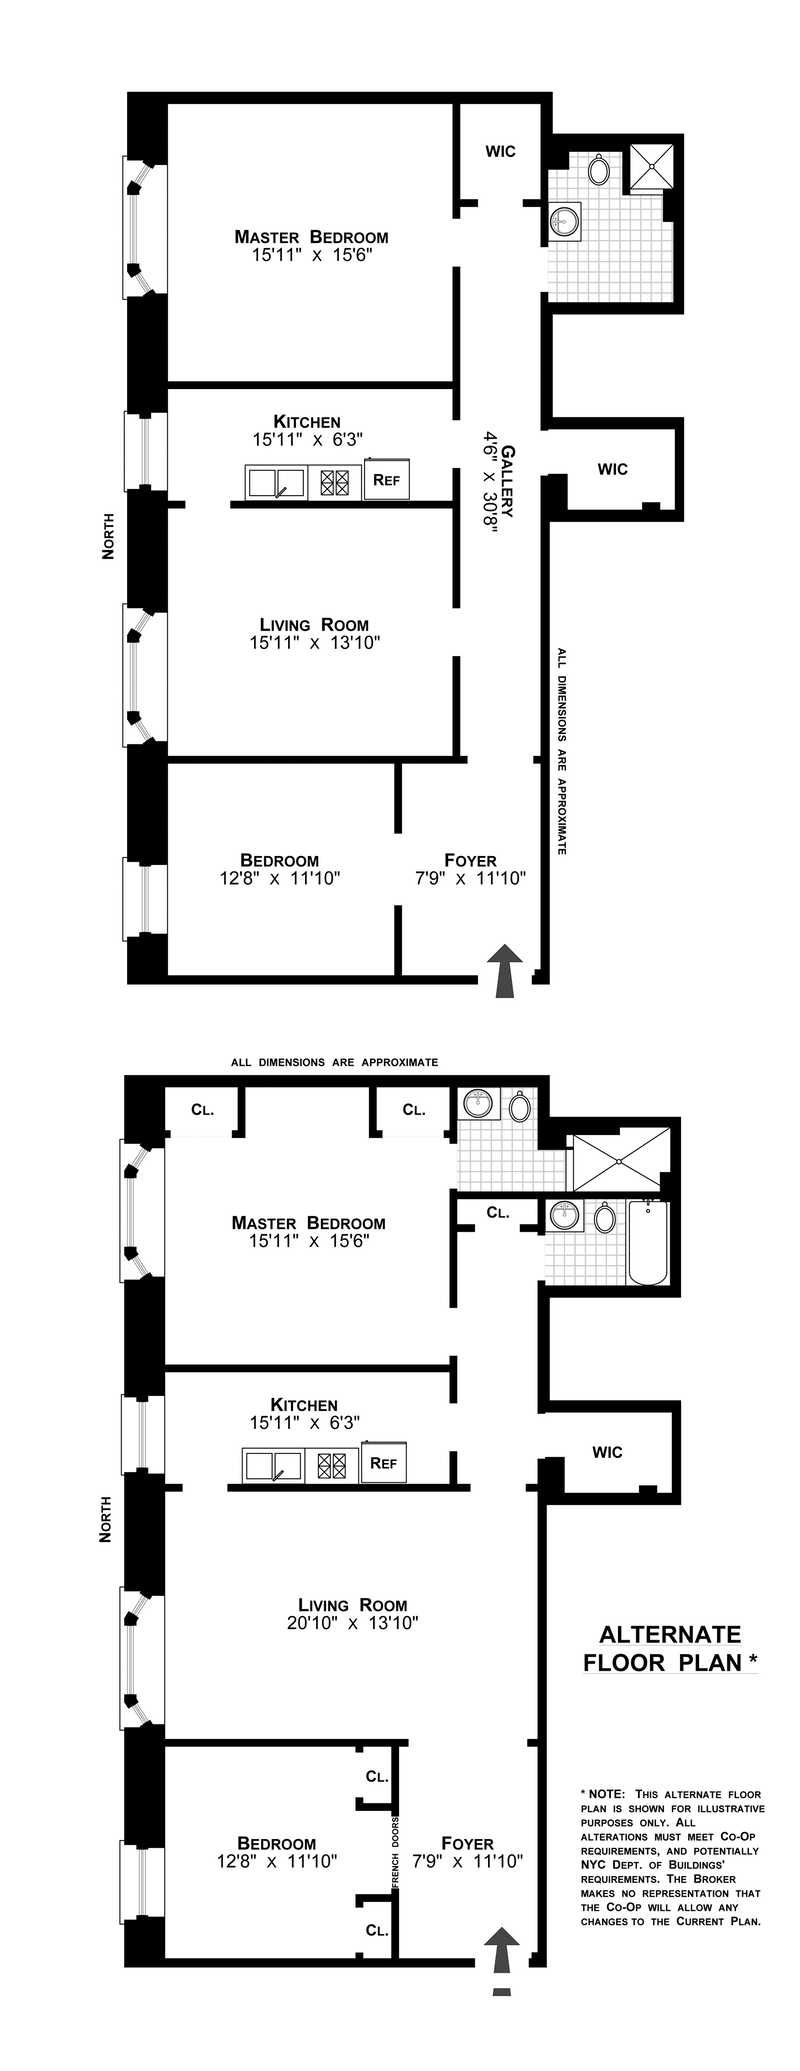 Floorplan for 285 Central Park West, 1E